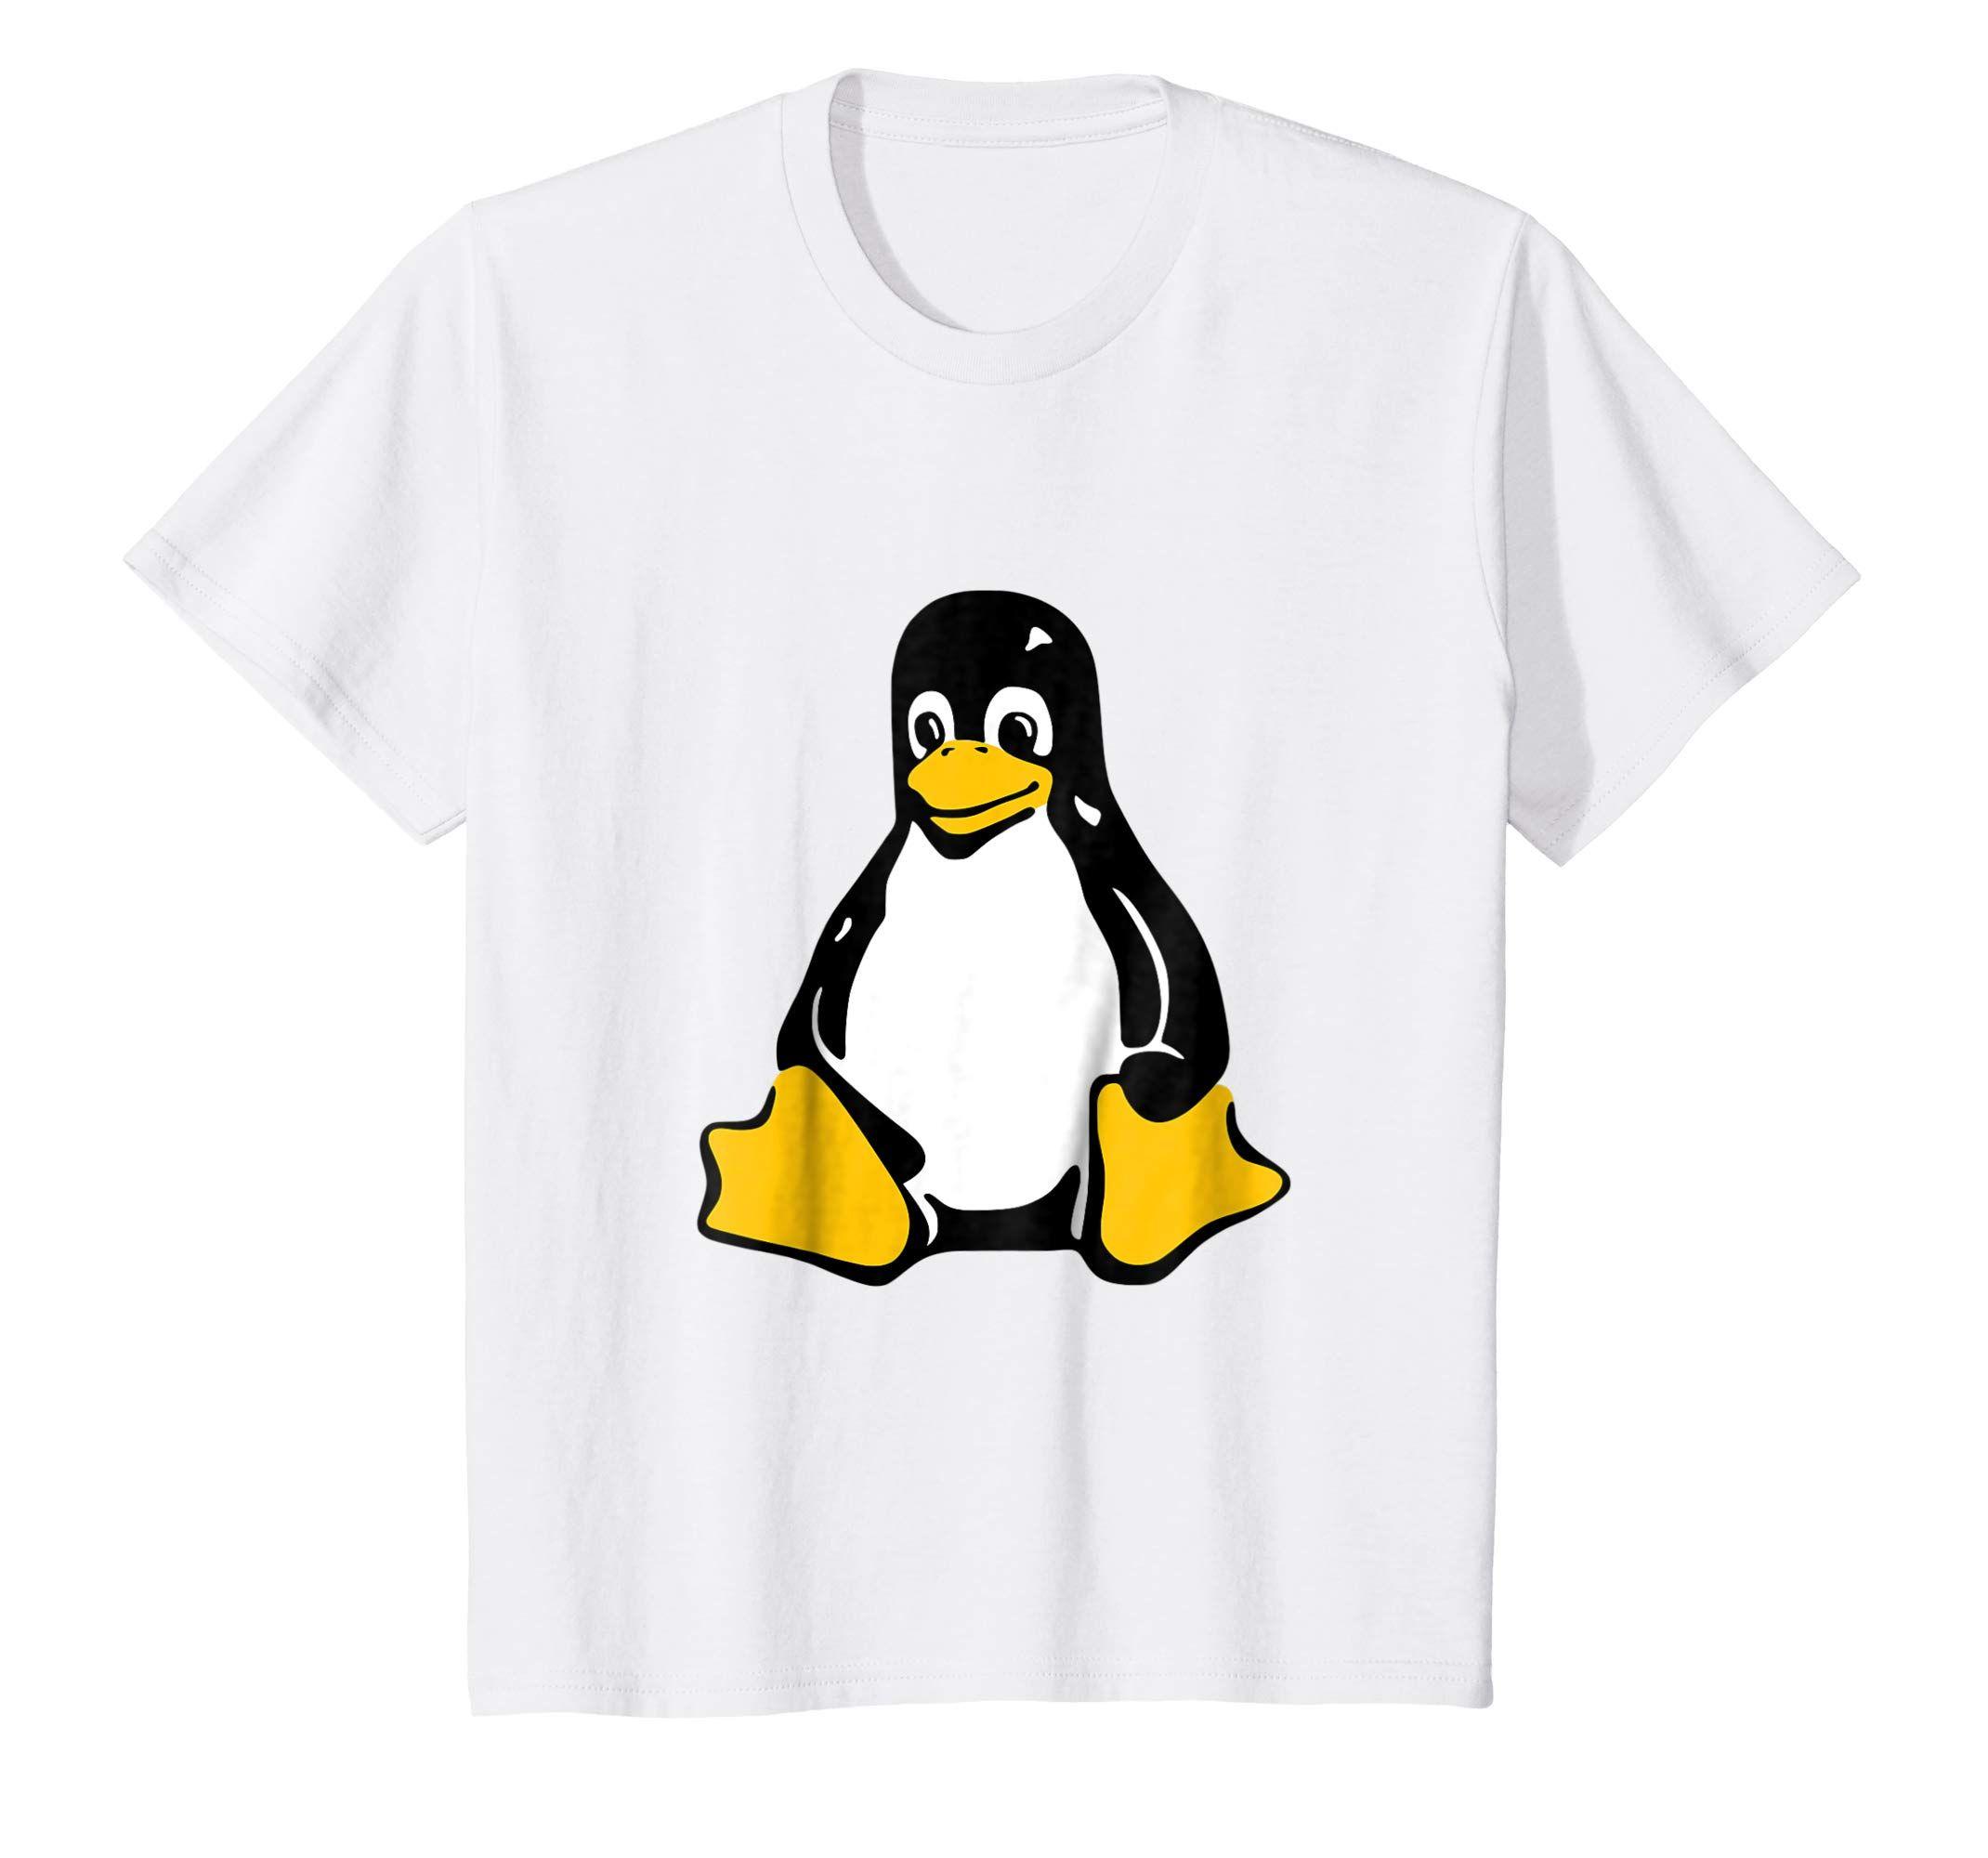 Tux Logo - Amazon.com: Tux Mascot T-Shirt Penguin Linux Logo: Clothing